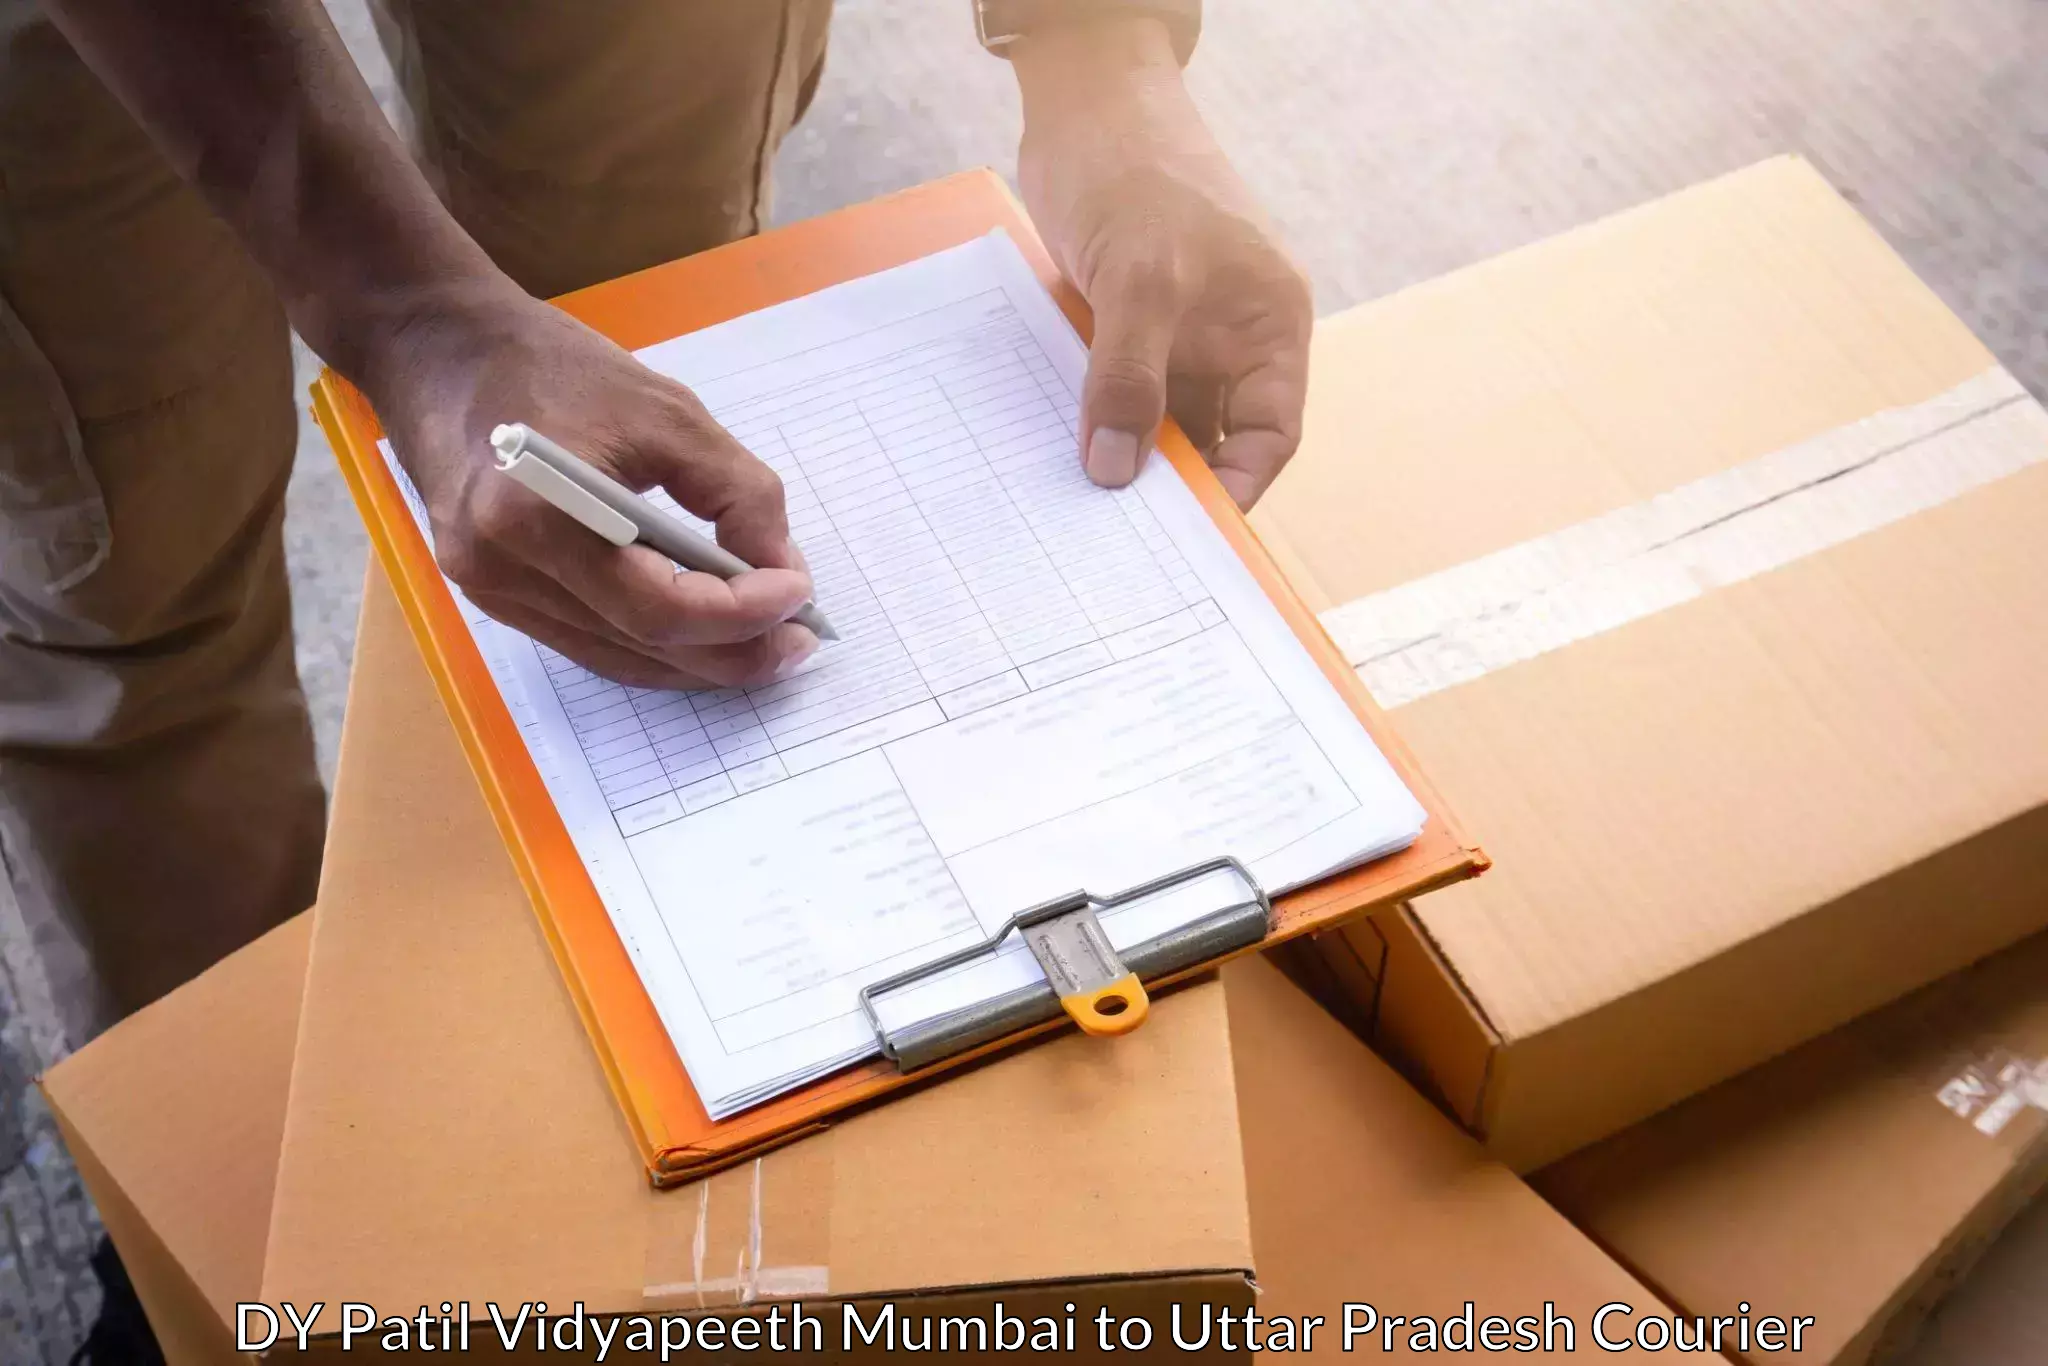 Nationwide courier service DY Patil Vidyapeeth Mumbai to Amroha